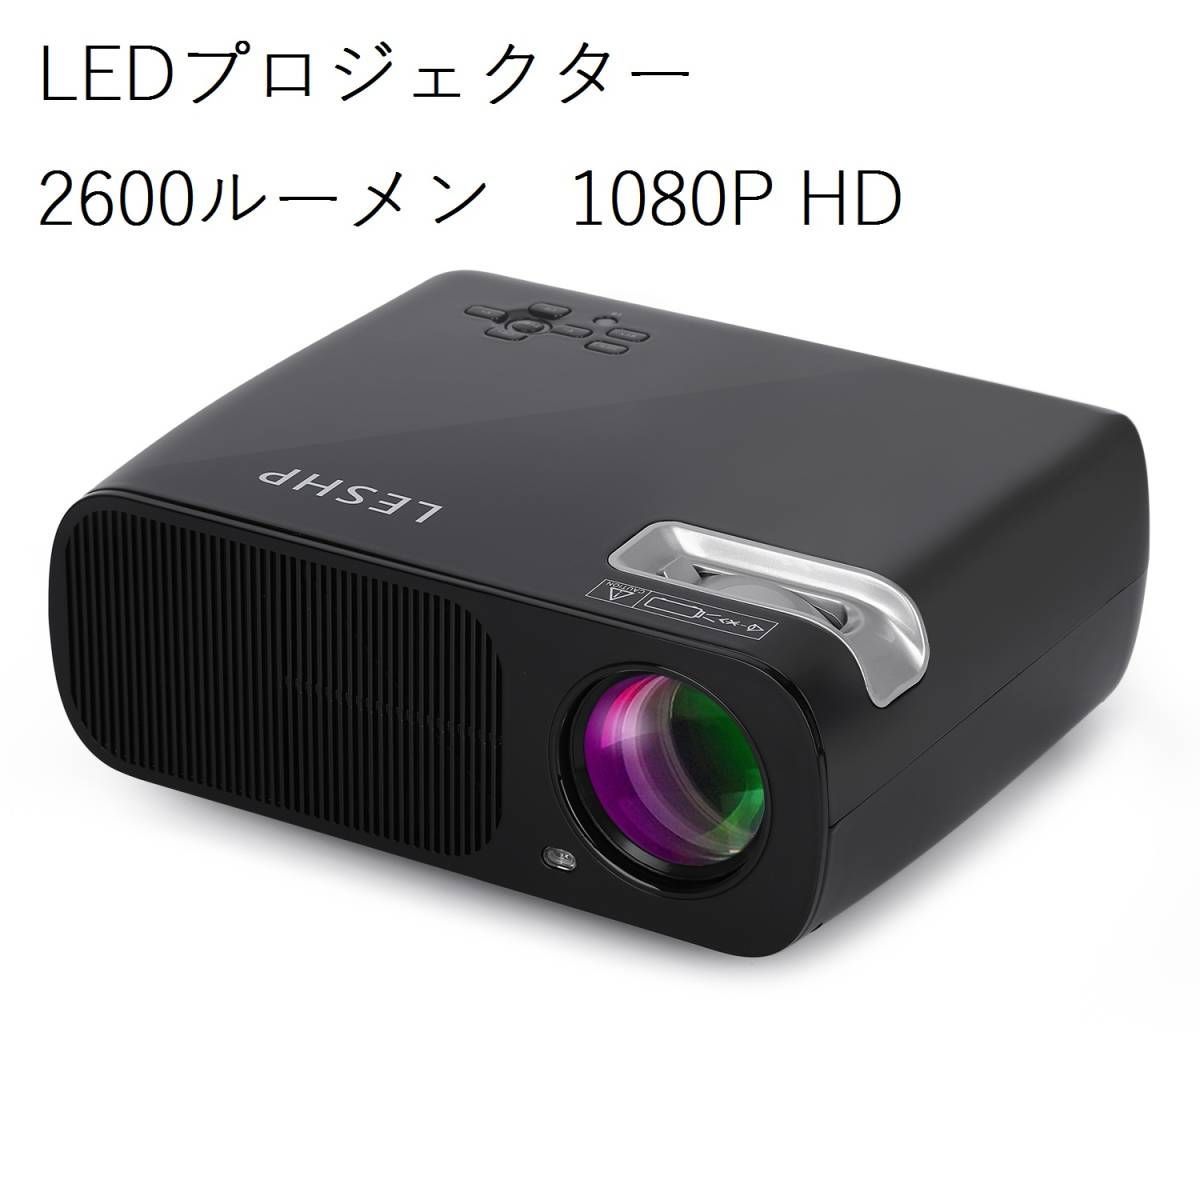 KWTT 【新品・送料無料】LESHP LED プロジェクター 1080P HD 800*480高